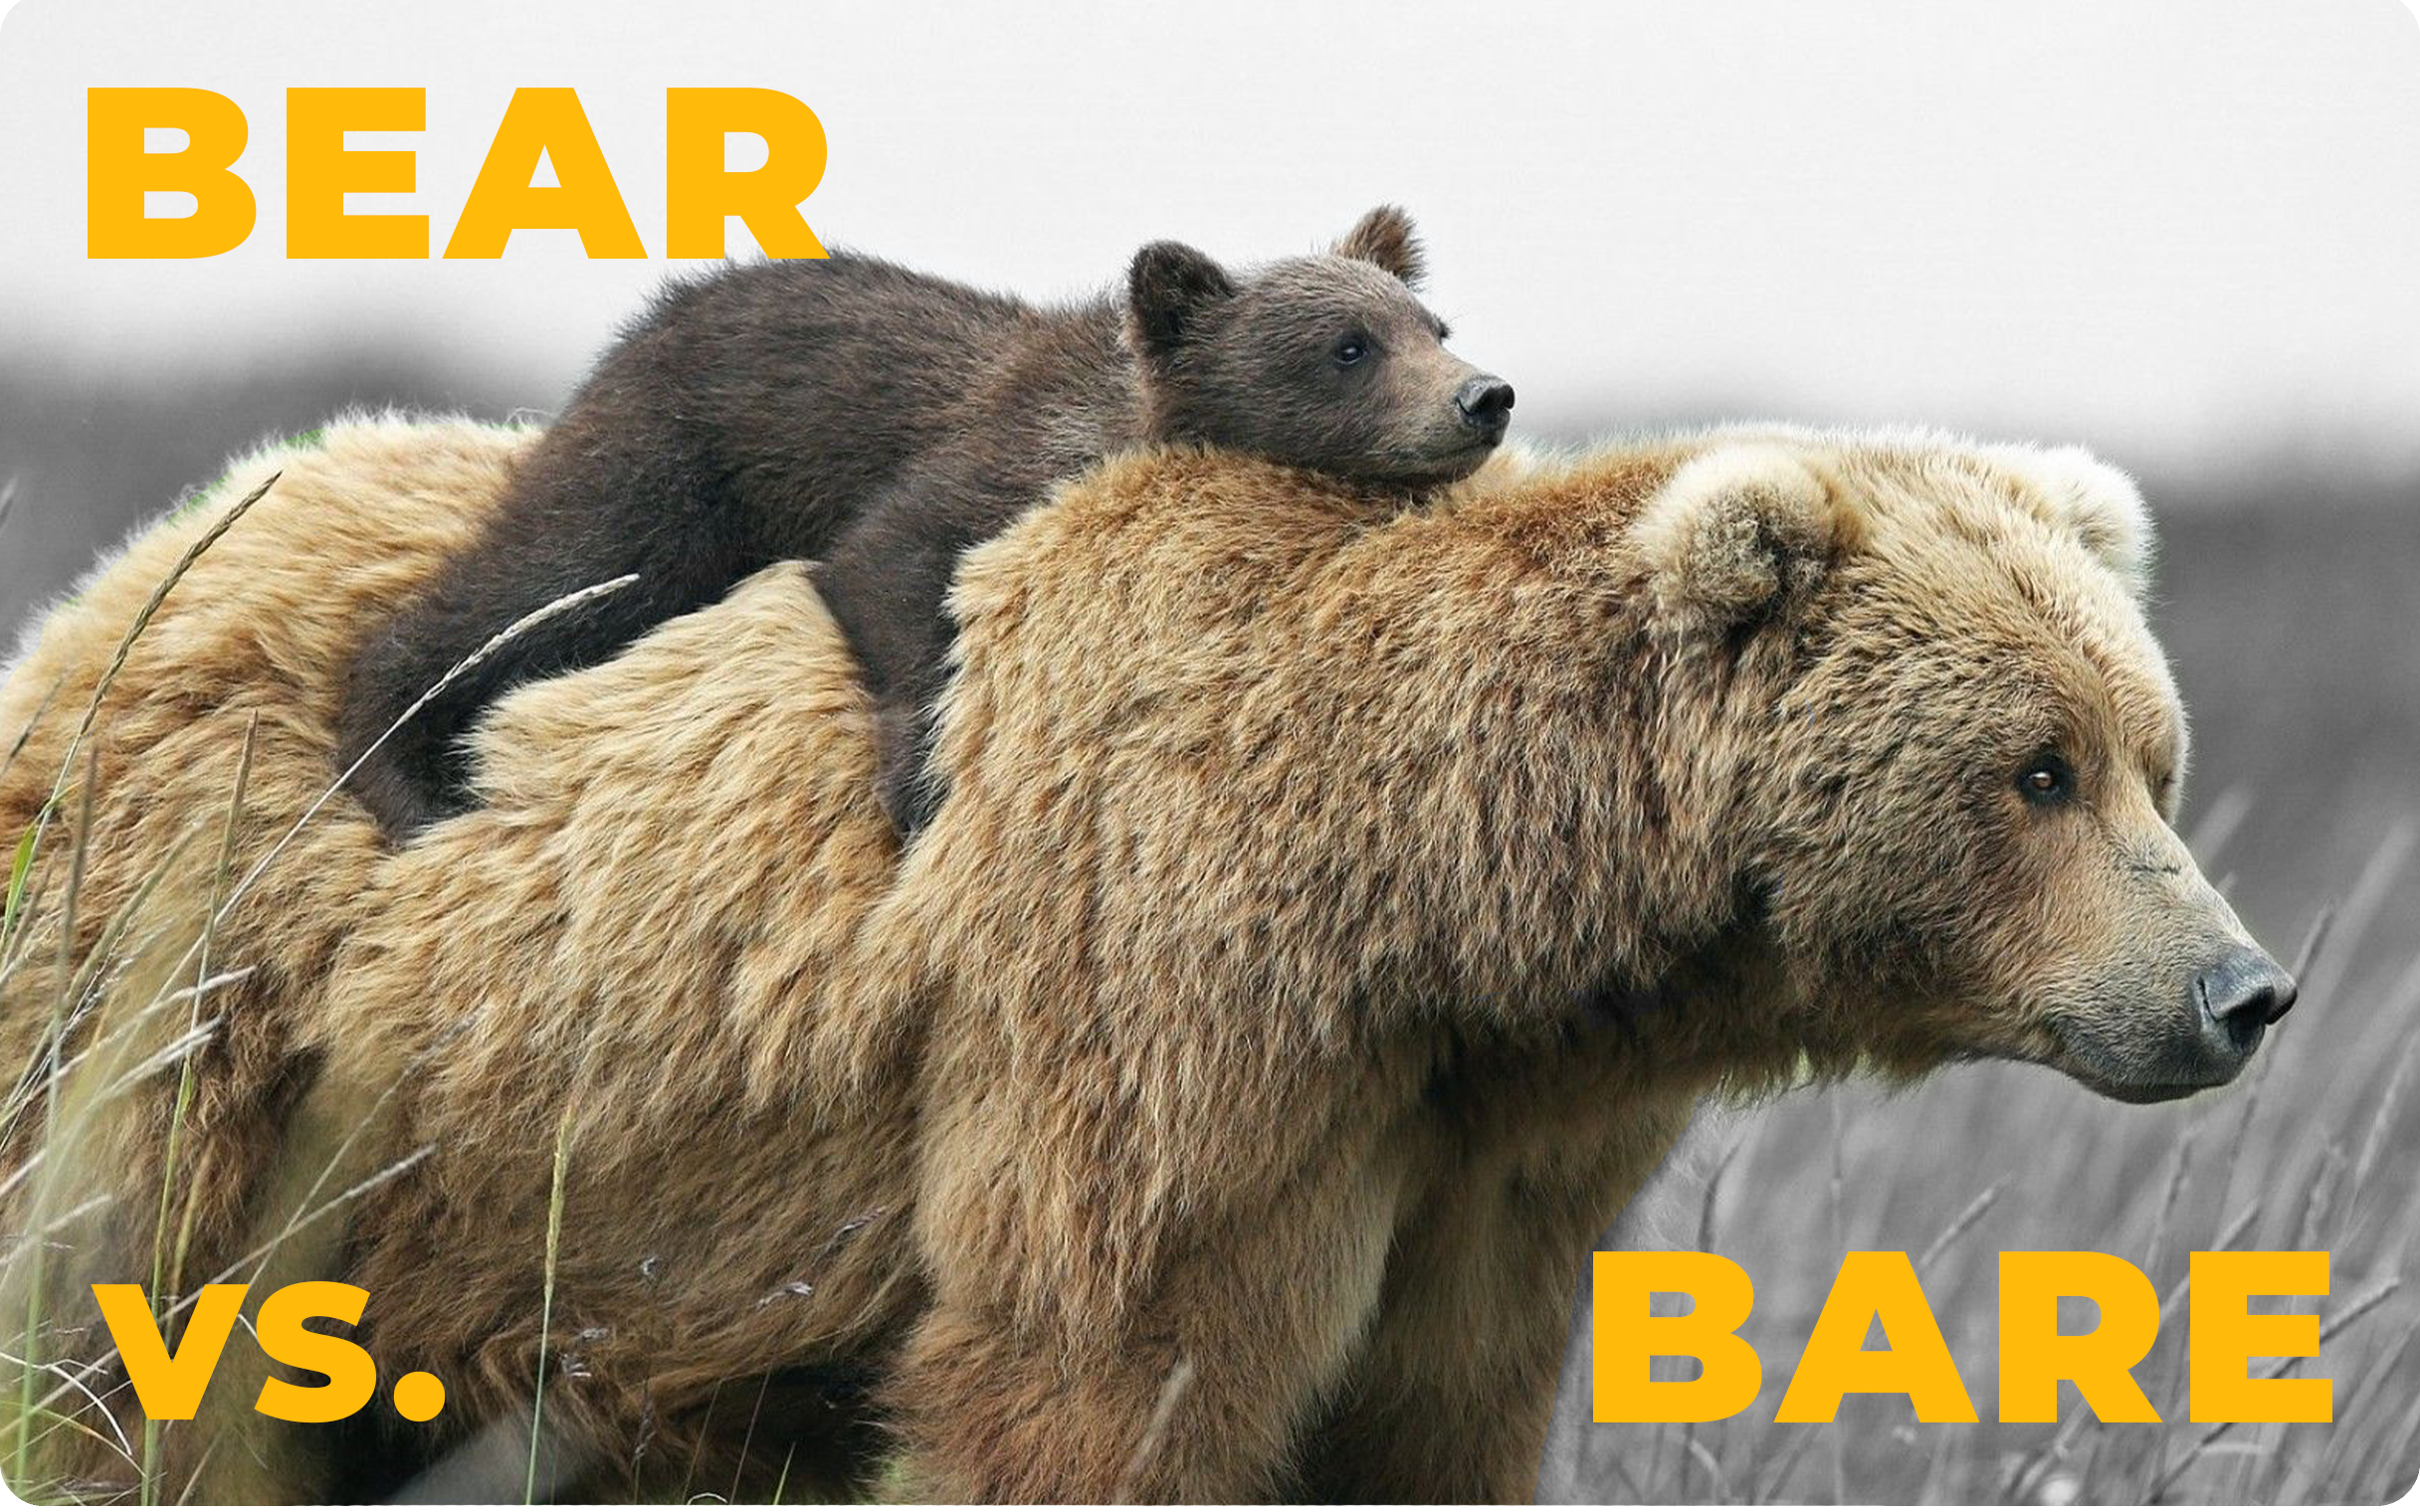 "Bare" vs. "Bear"